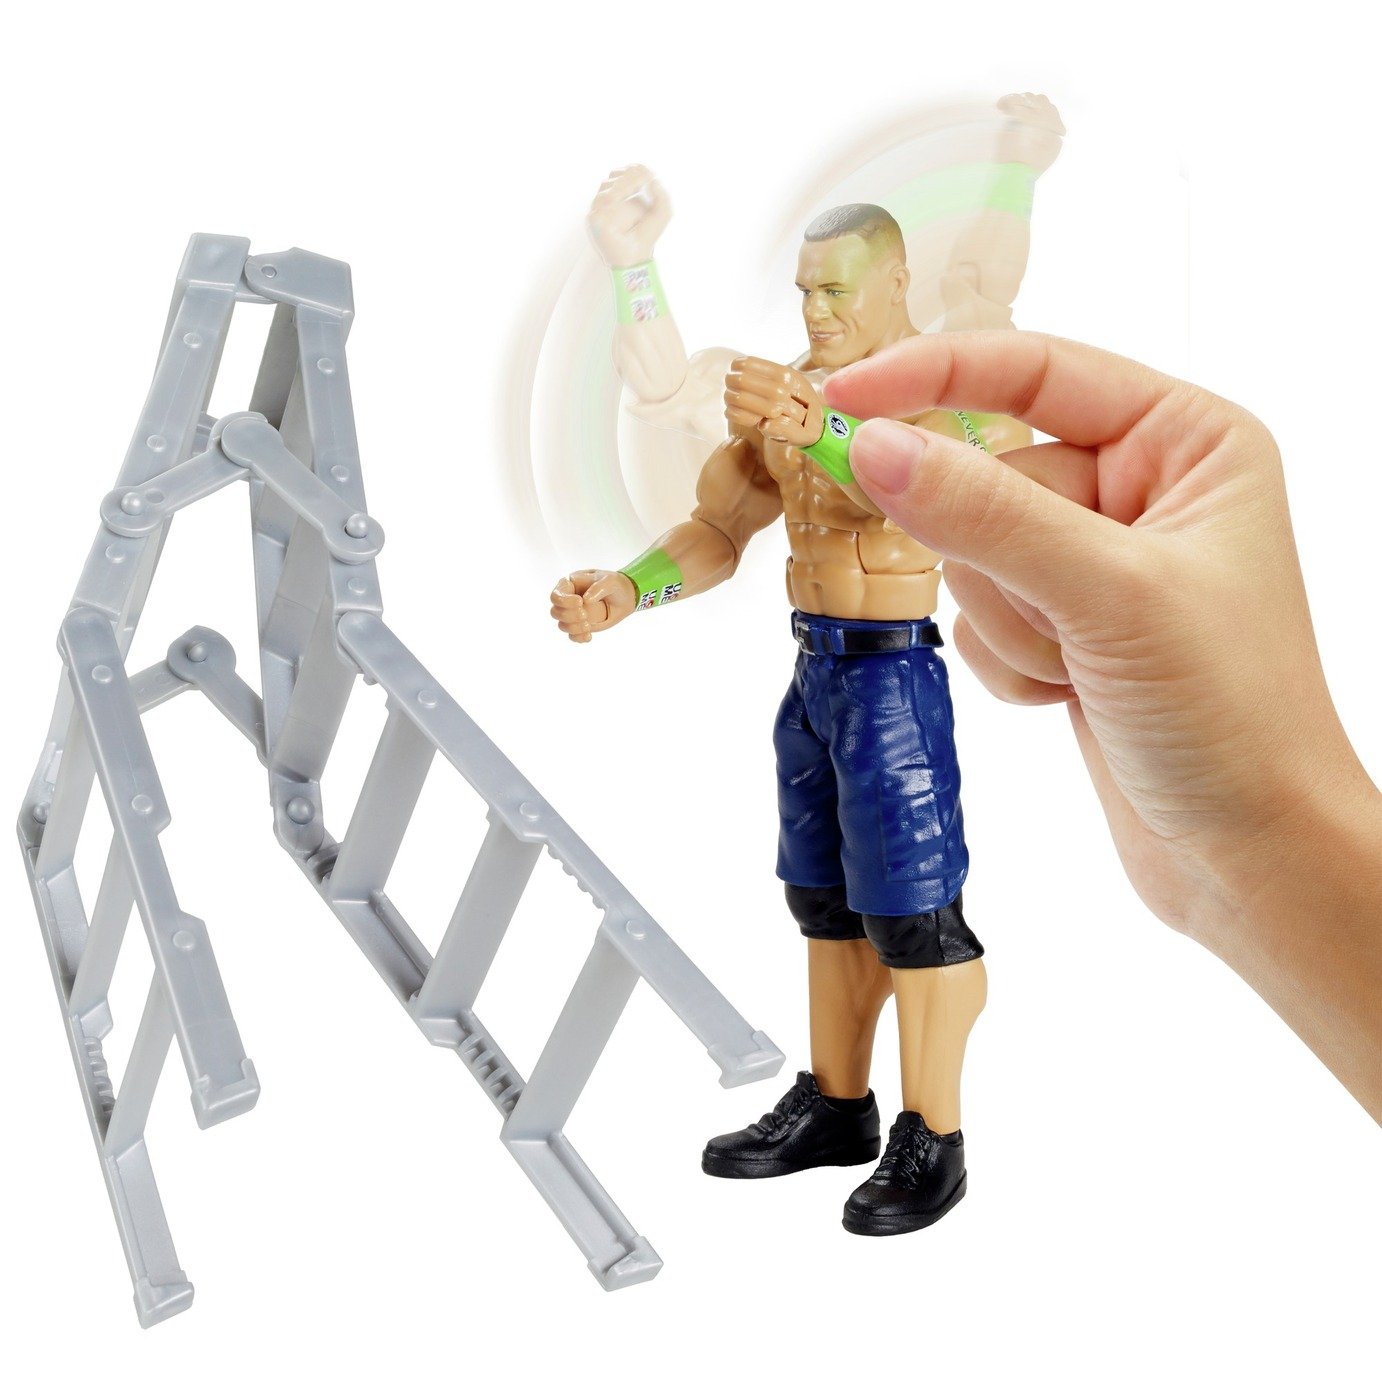 WWE Wrekkin John Cena Figure Review